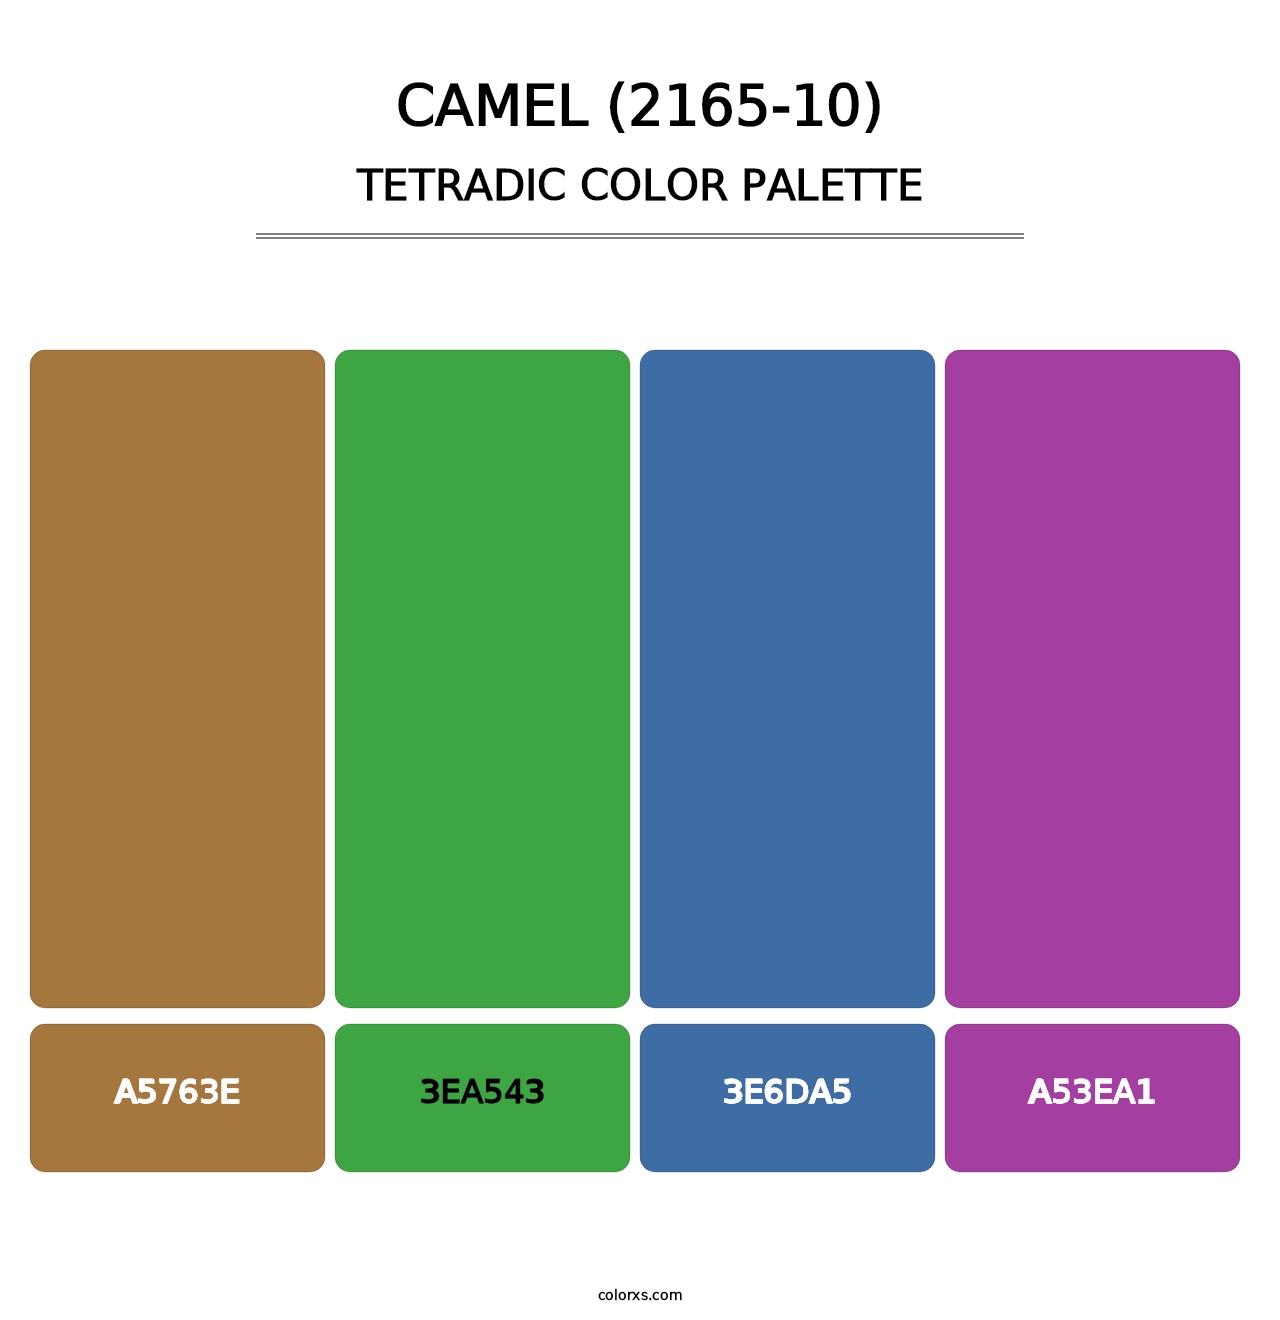 Camel (2165-10) - Tetradic Color Palette